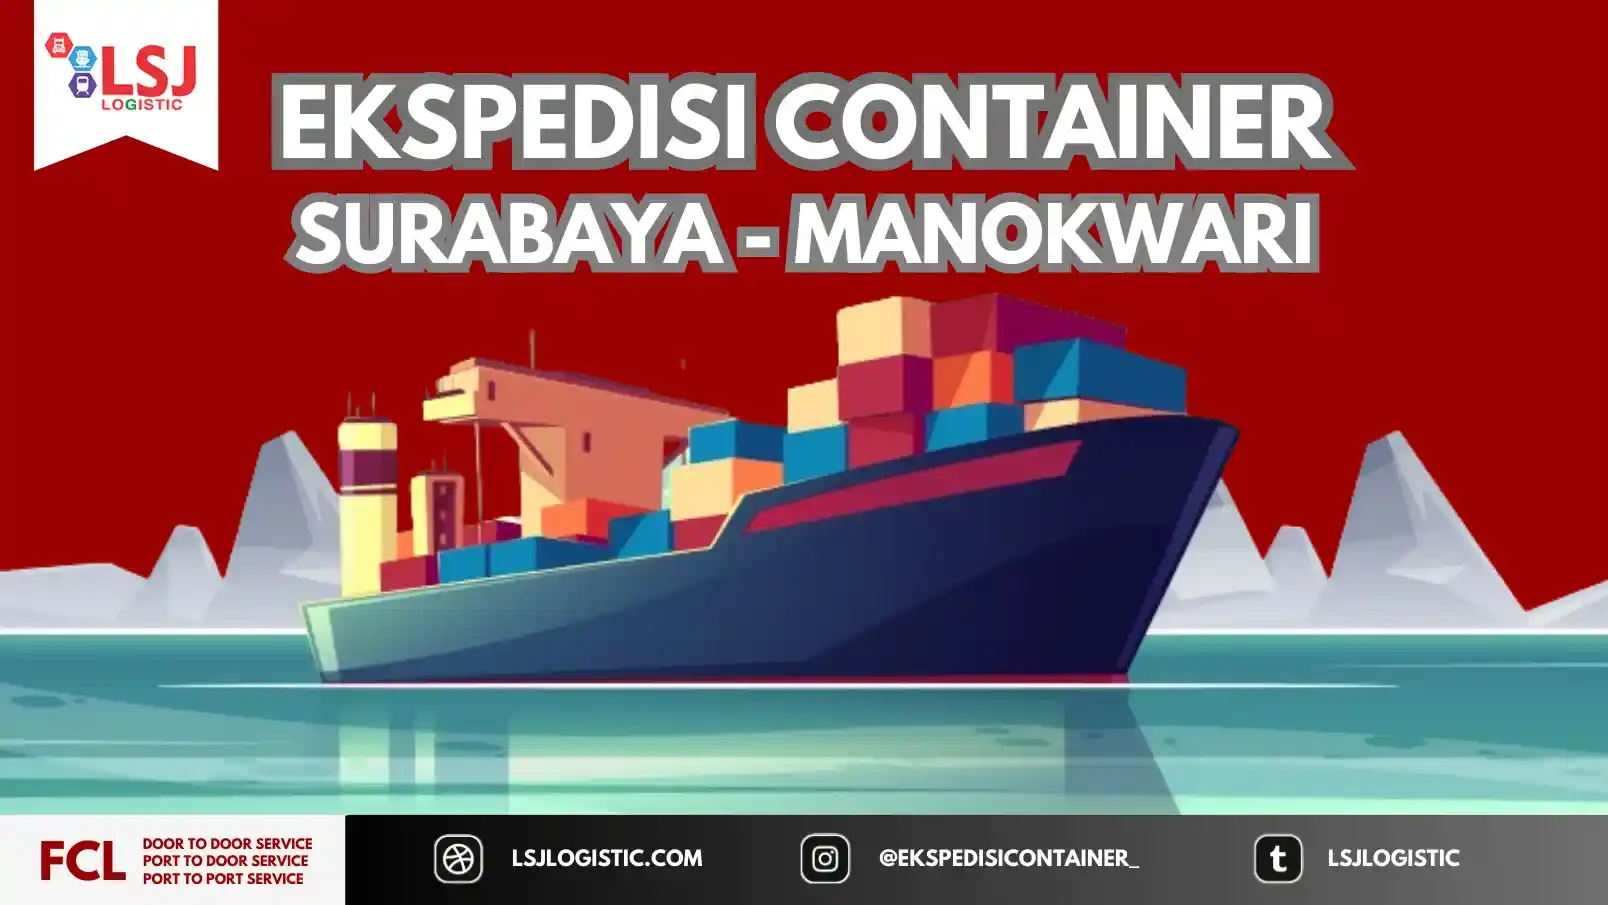 Harga Pengiriman Container Surabaya Manokwari